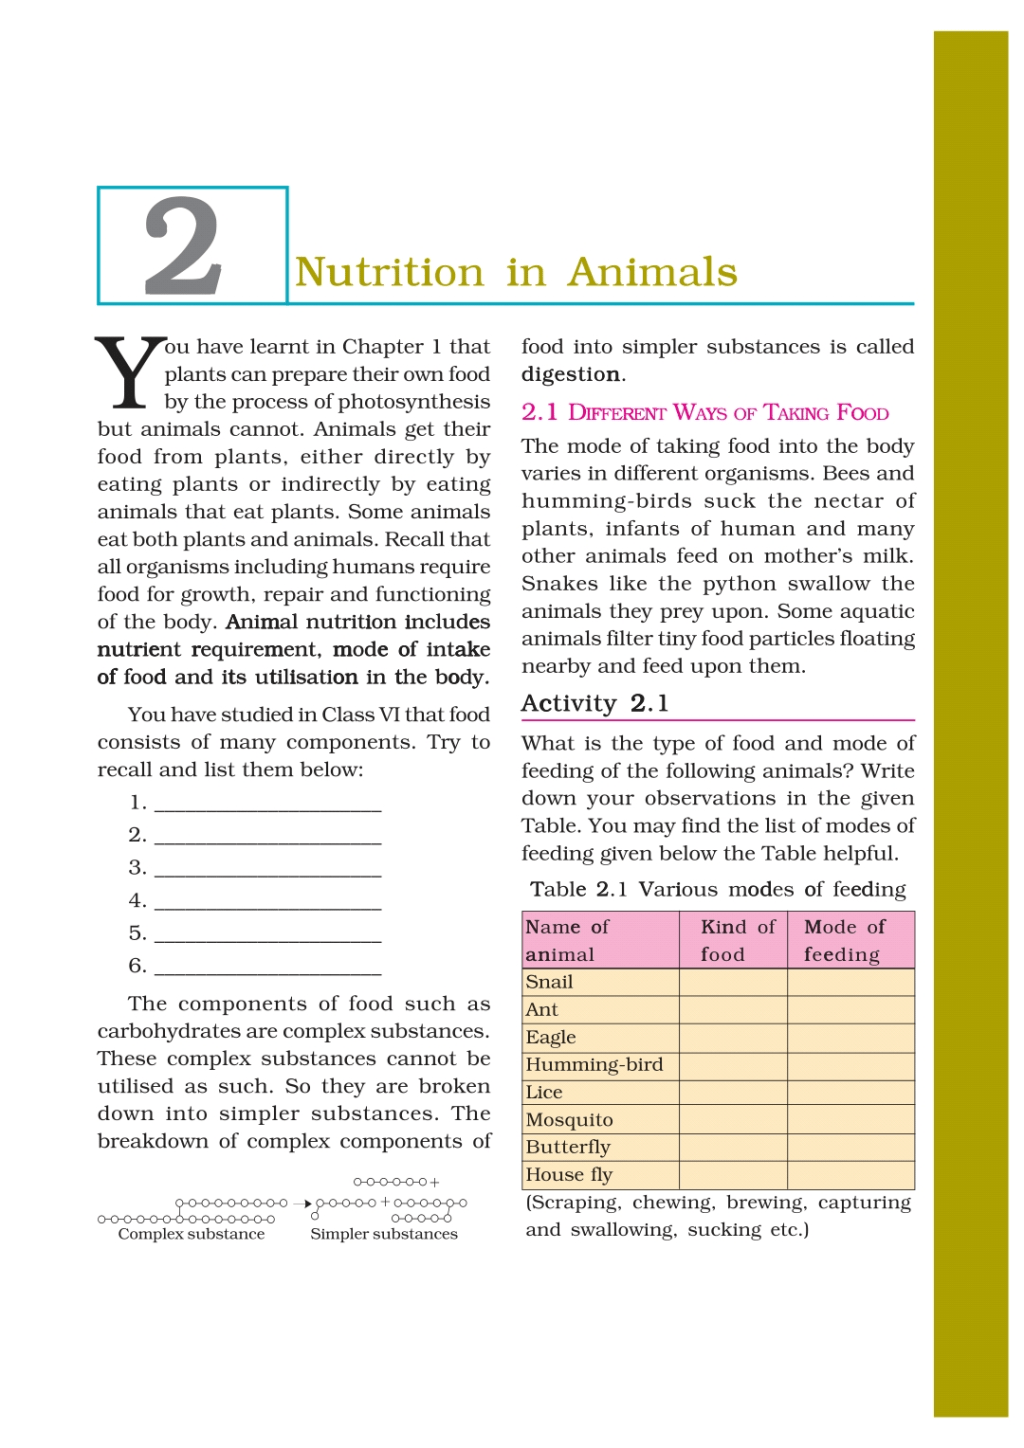 Chapter-2 Nutrition in Animals (e-book) Class 7 Notes | EduRev